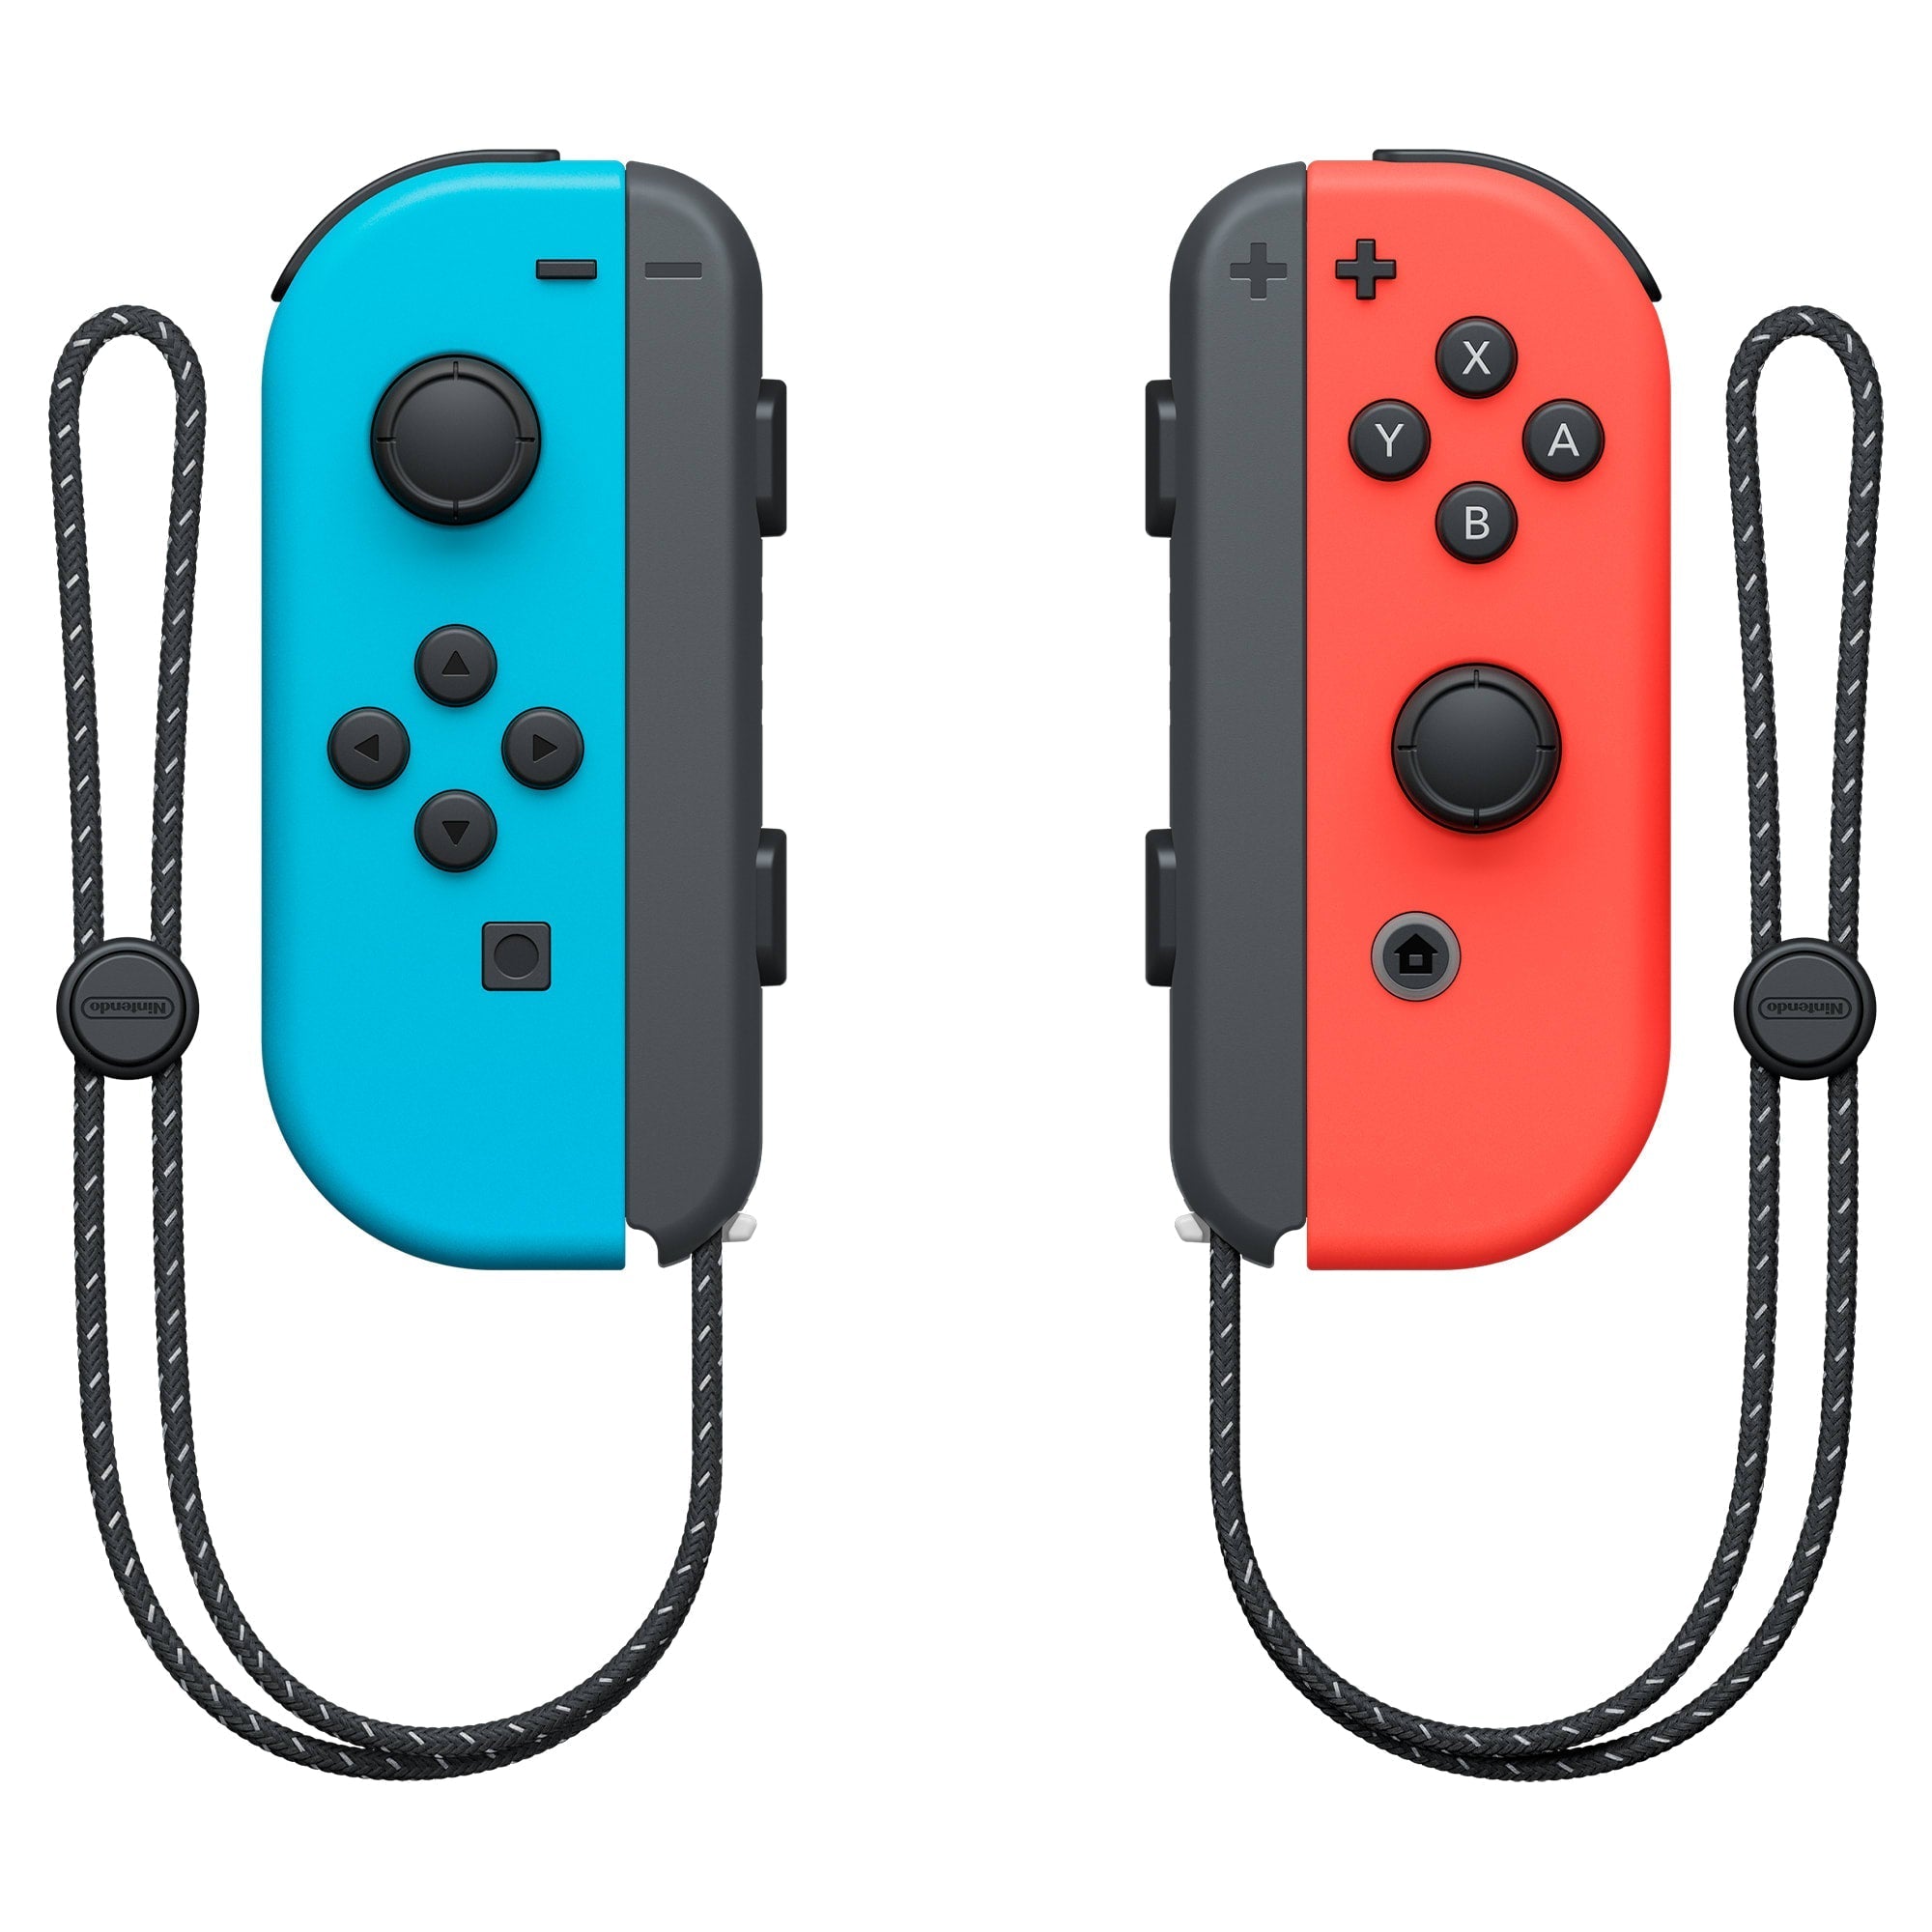 Nintendo Switch OLED 32GB - Neon Red / Blue - Refurbished Good